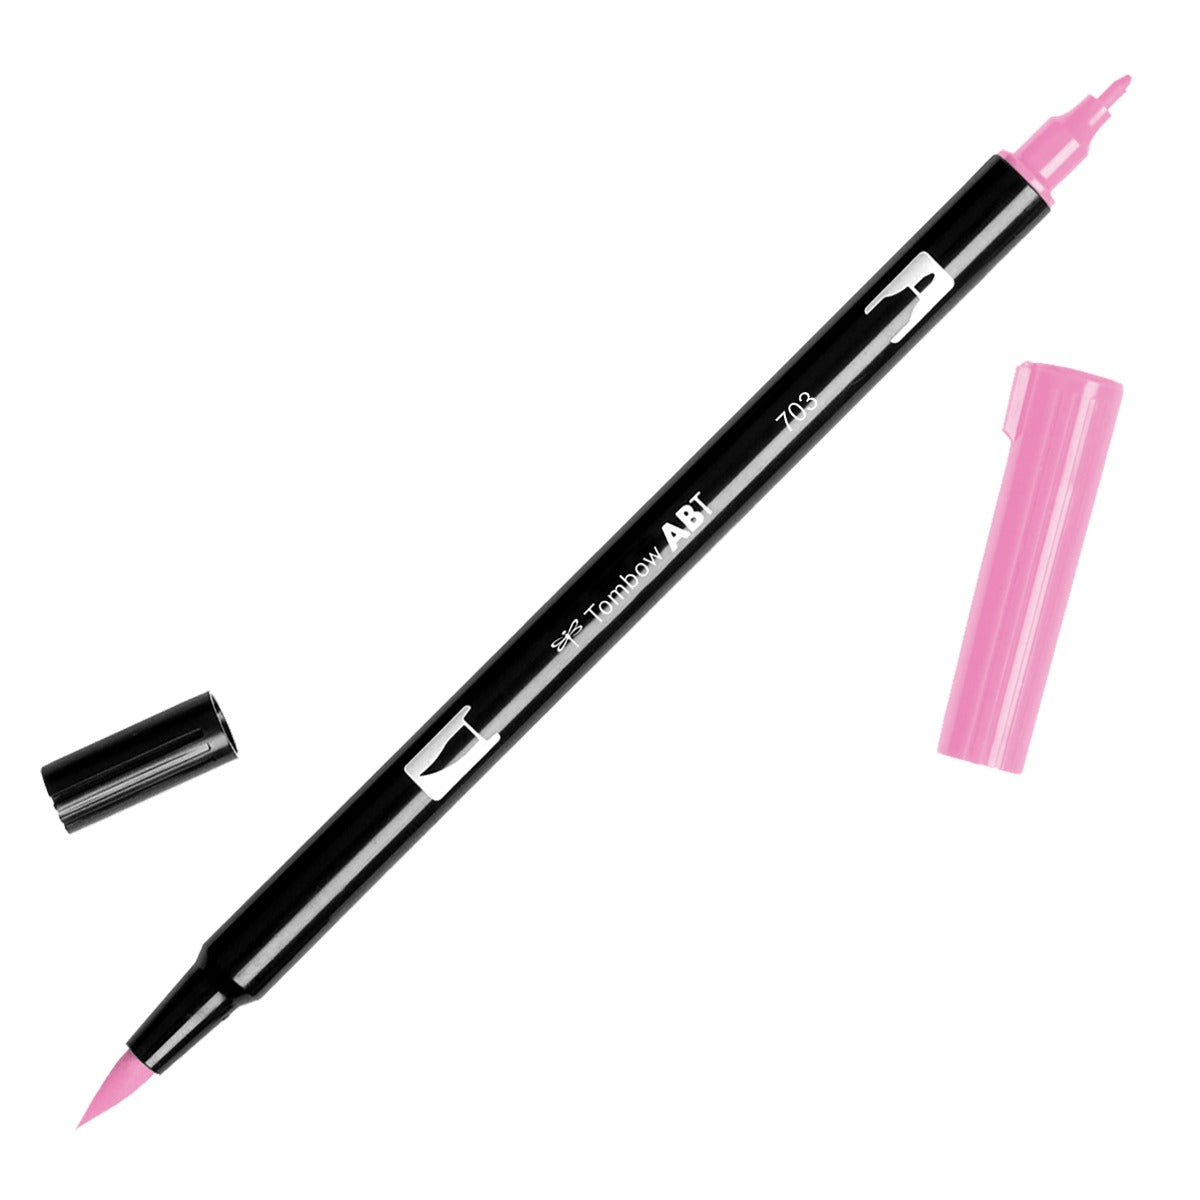 Tombow Dual Brush Pen 703 Pink Rose